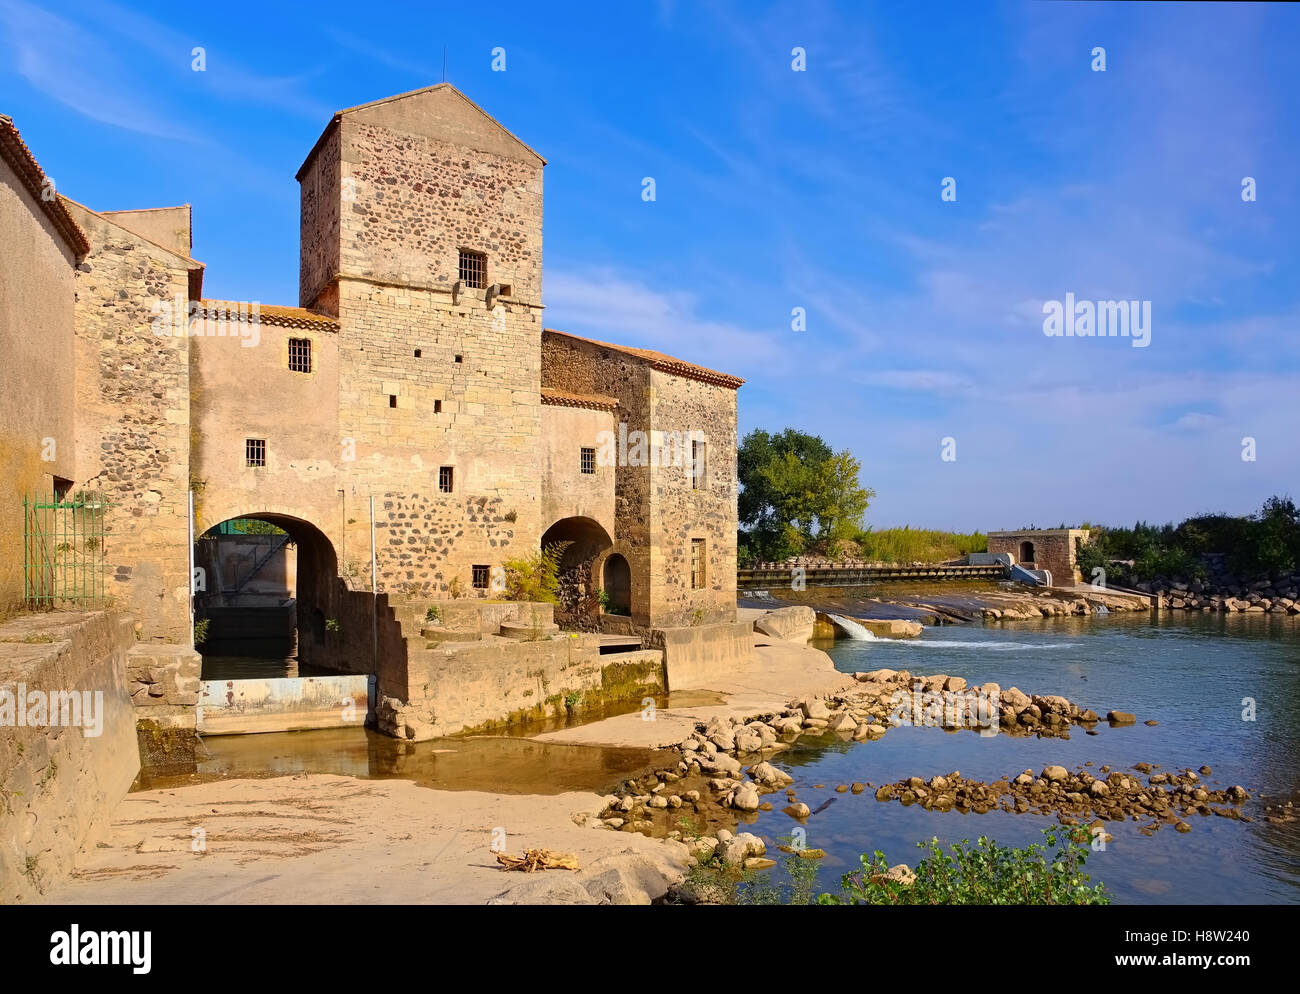 Saint-Thibery Wassermühle - Saint-Thibery watermill, Languedoc-Roussillon; France Stock Photo